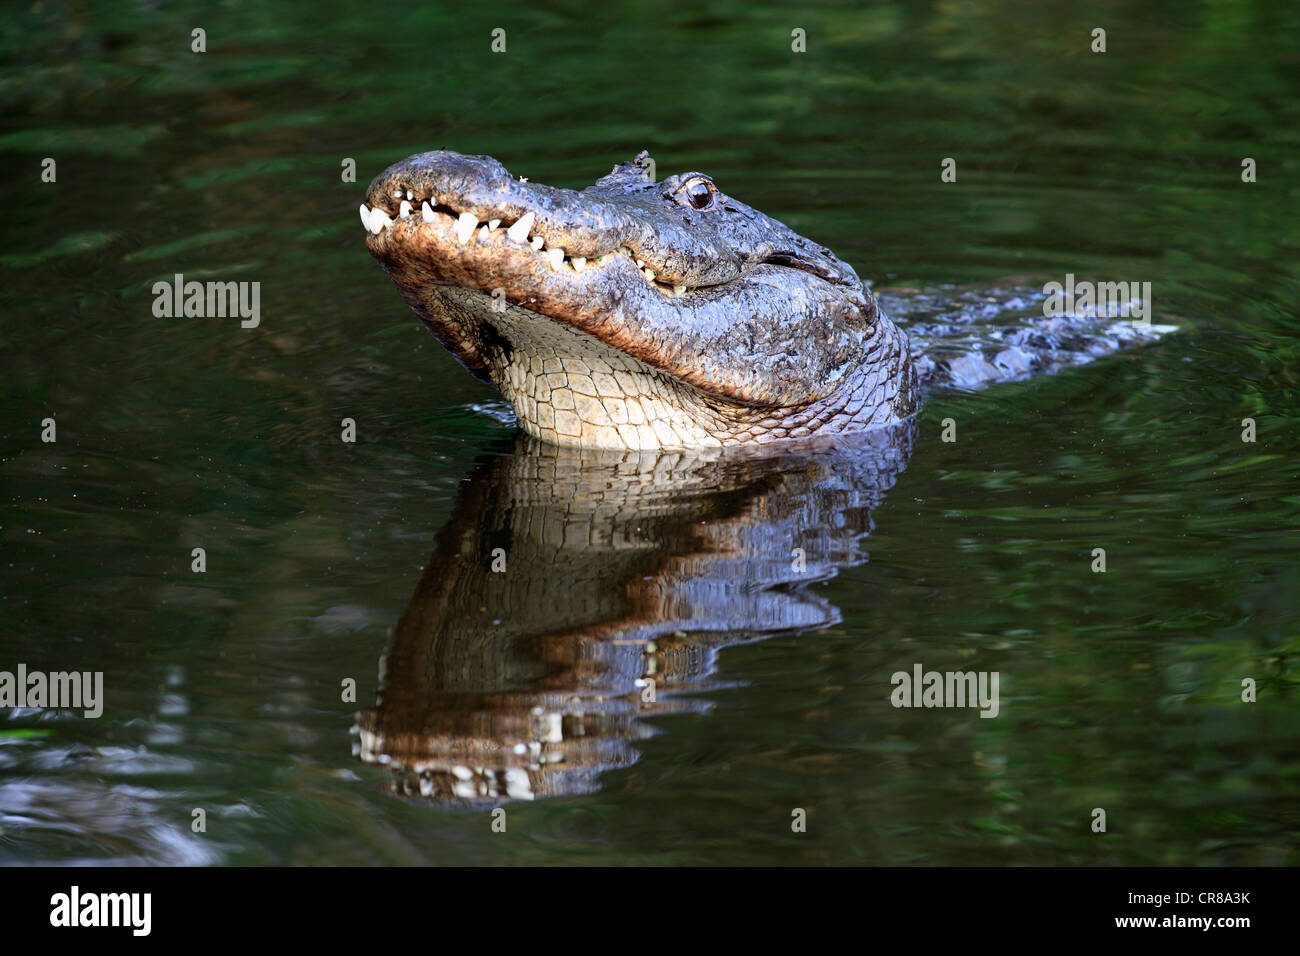 American alligator (Alligator mississippiensis), male, courtship dislpay, in water, portrait, Florida, USA Stock Photo